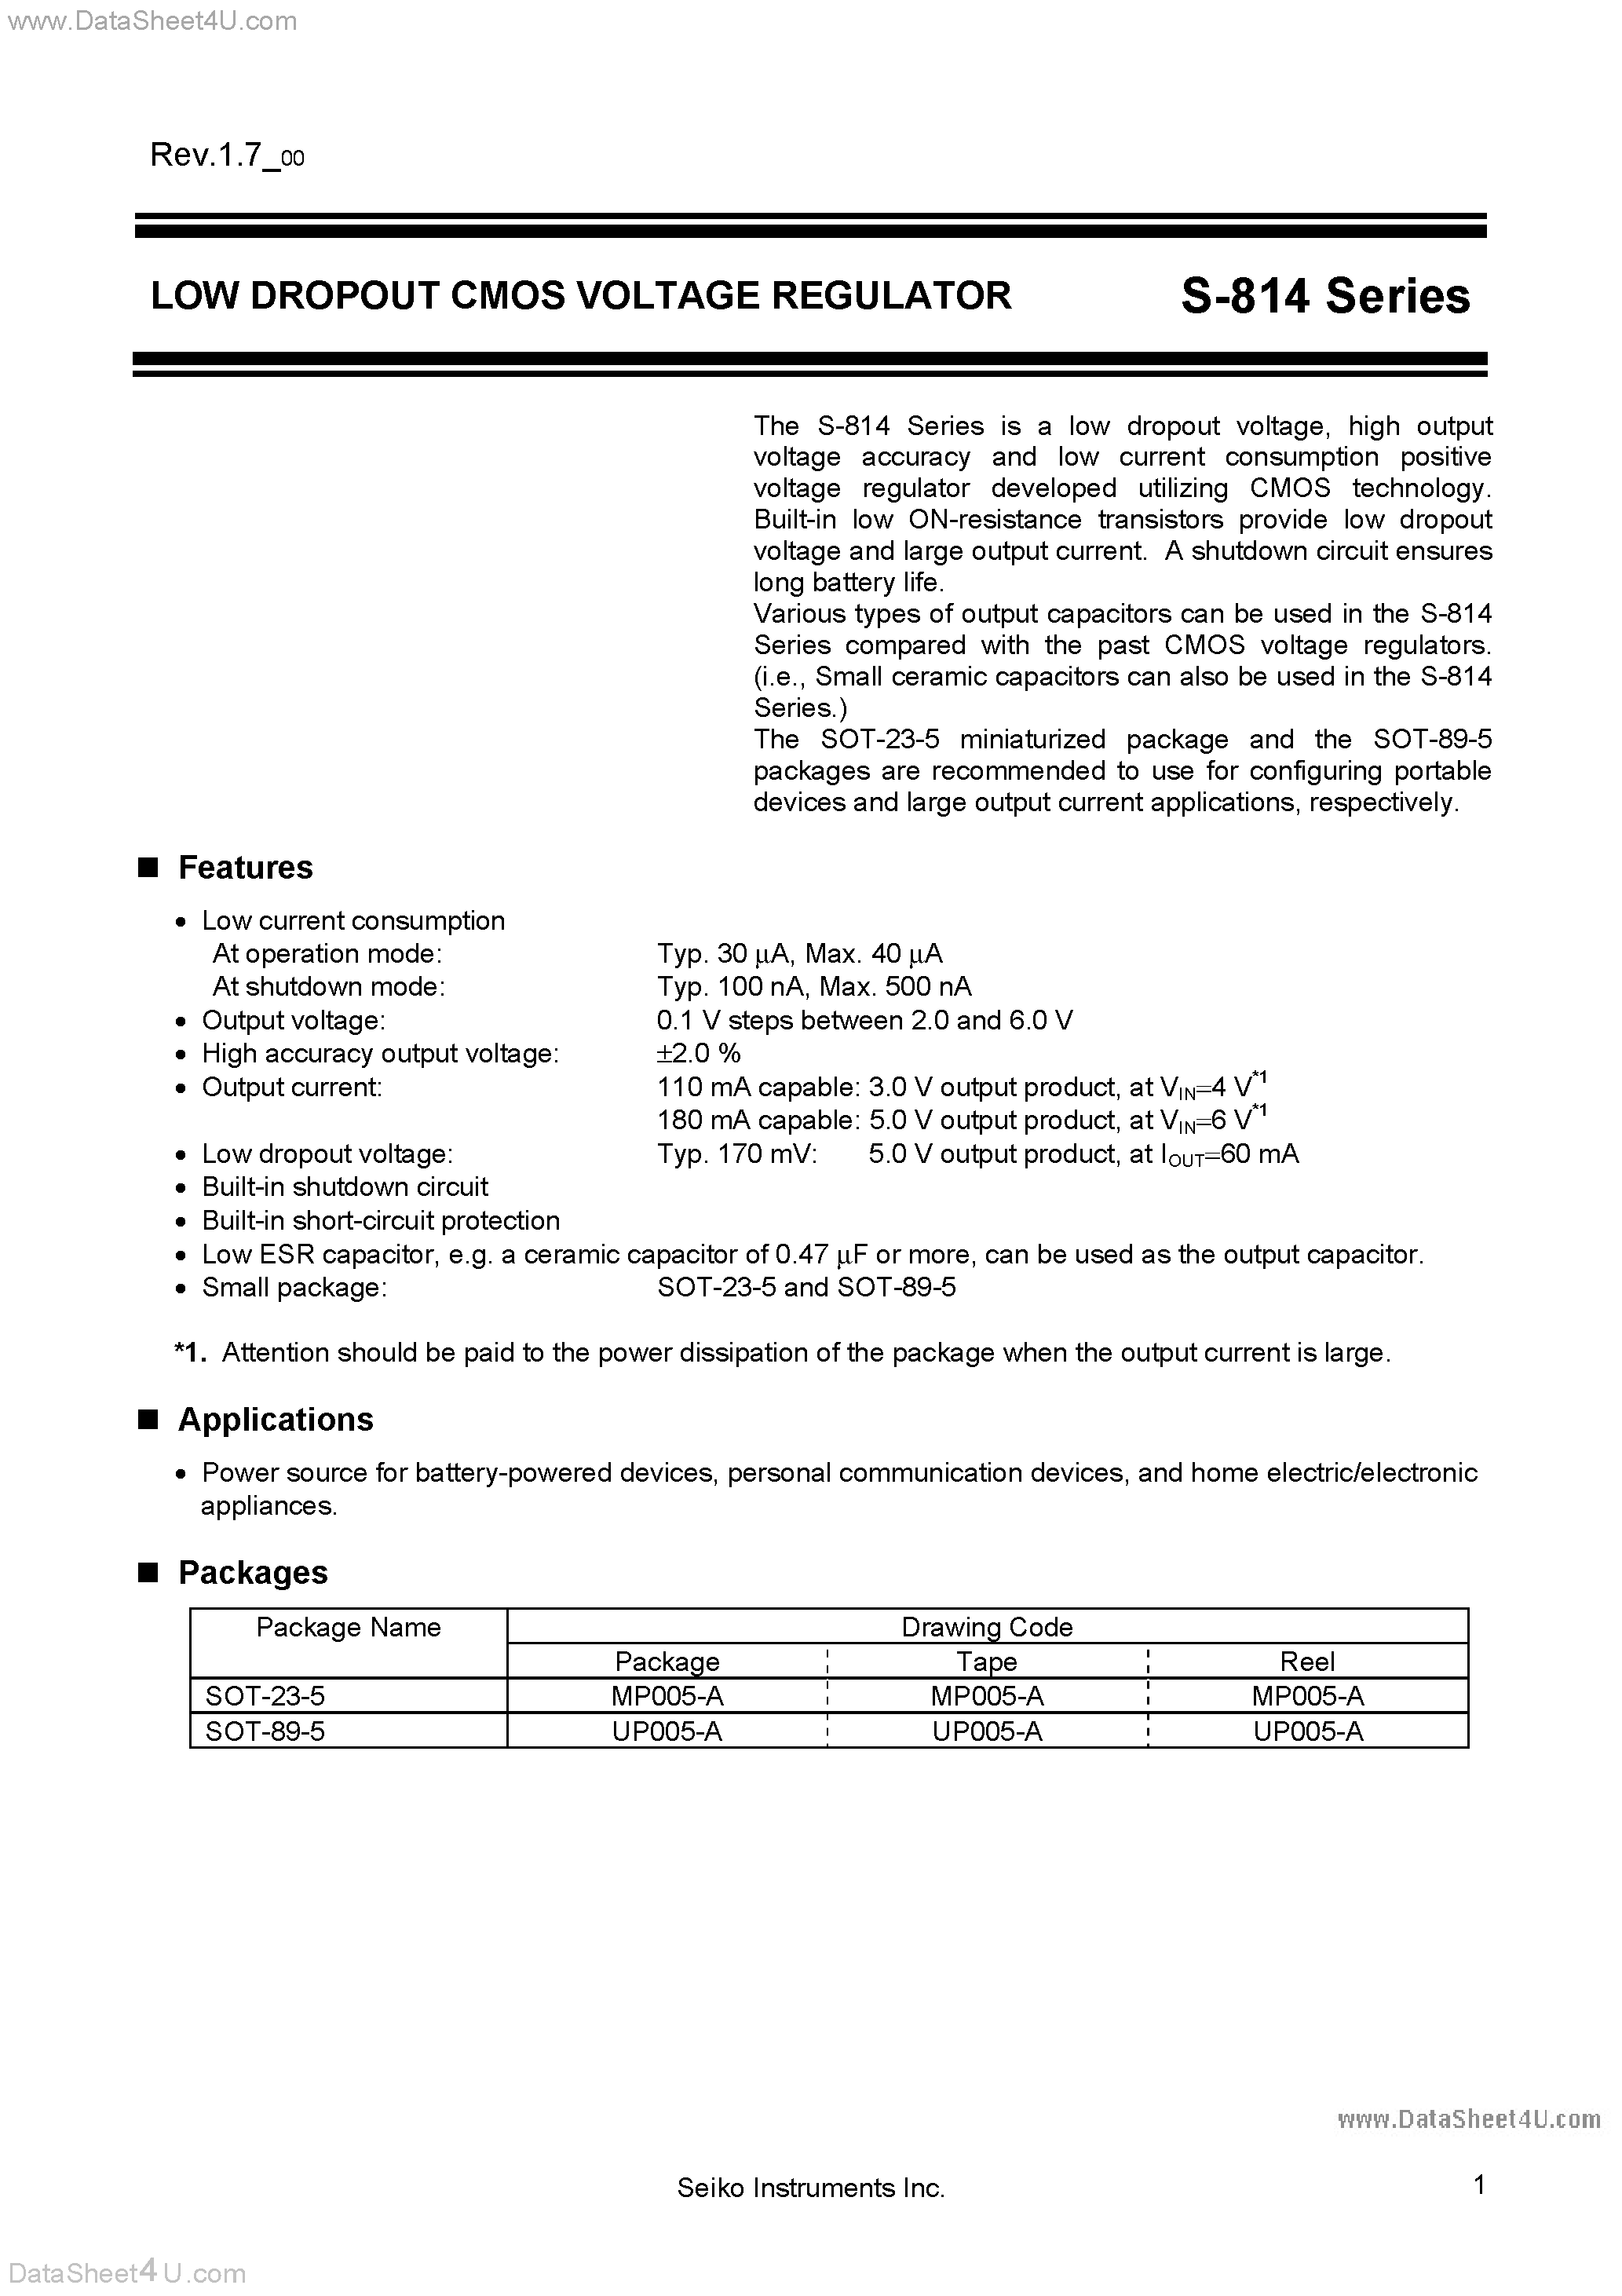 Datasheet S-814 - (S-814 Series) Low Dropout CMOS Voltage Regulator page 1